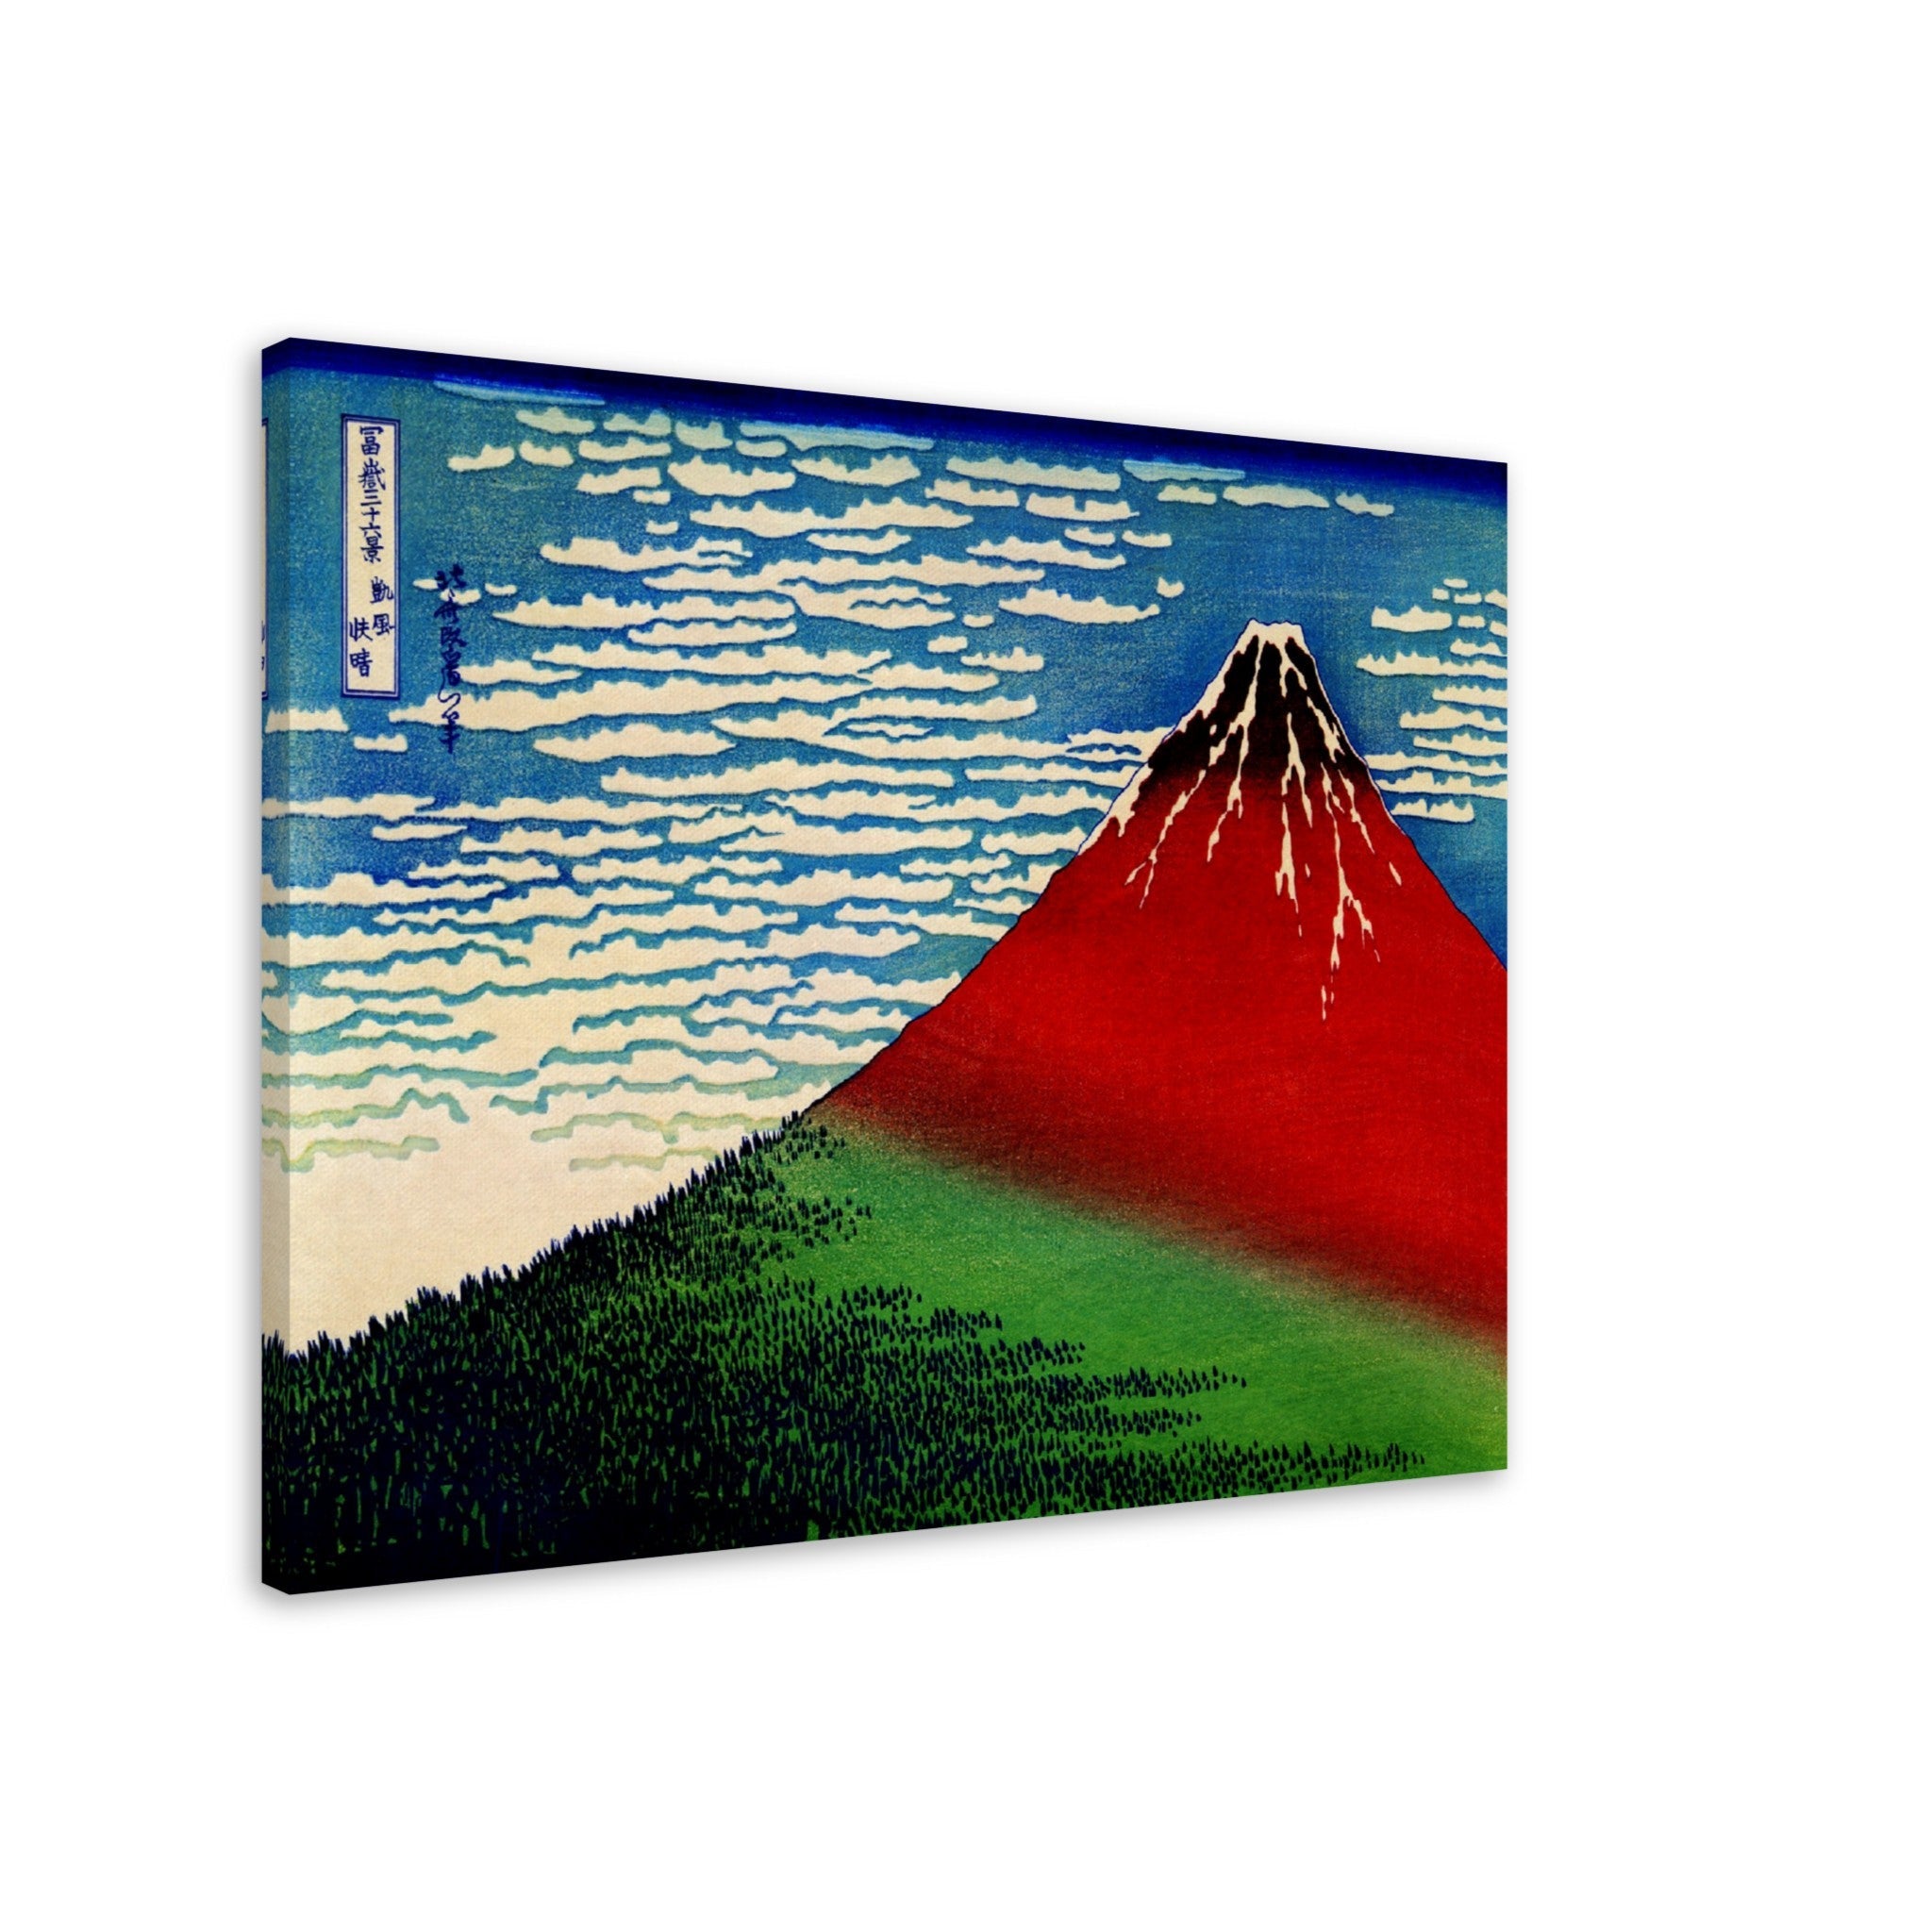 Mount Fuji Canvas Print, Katsushika Hokusai 1833 - Mount Fuji Canvas - Red Fuji Canvas Print - WallArtPrints4U